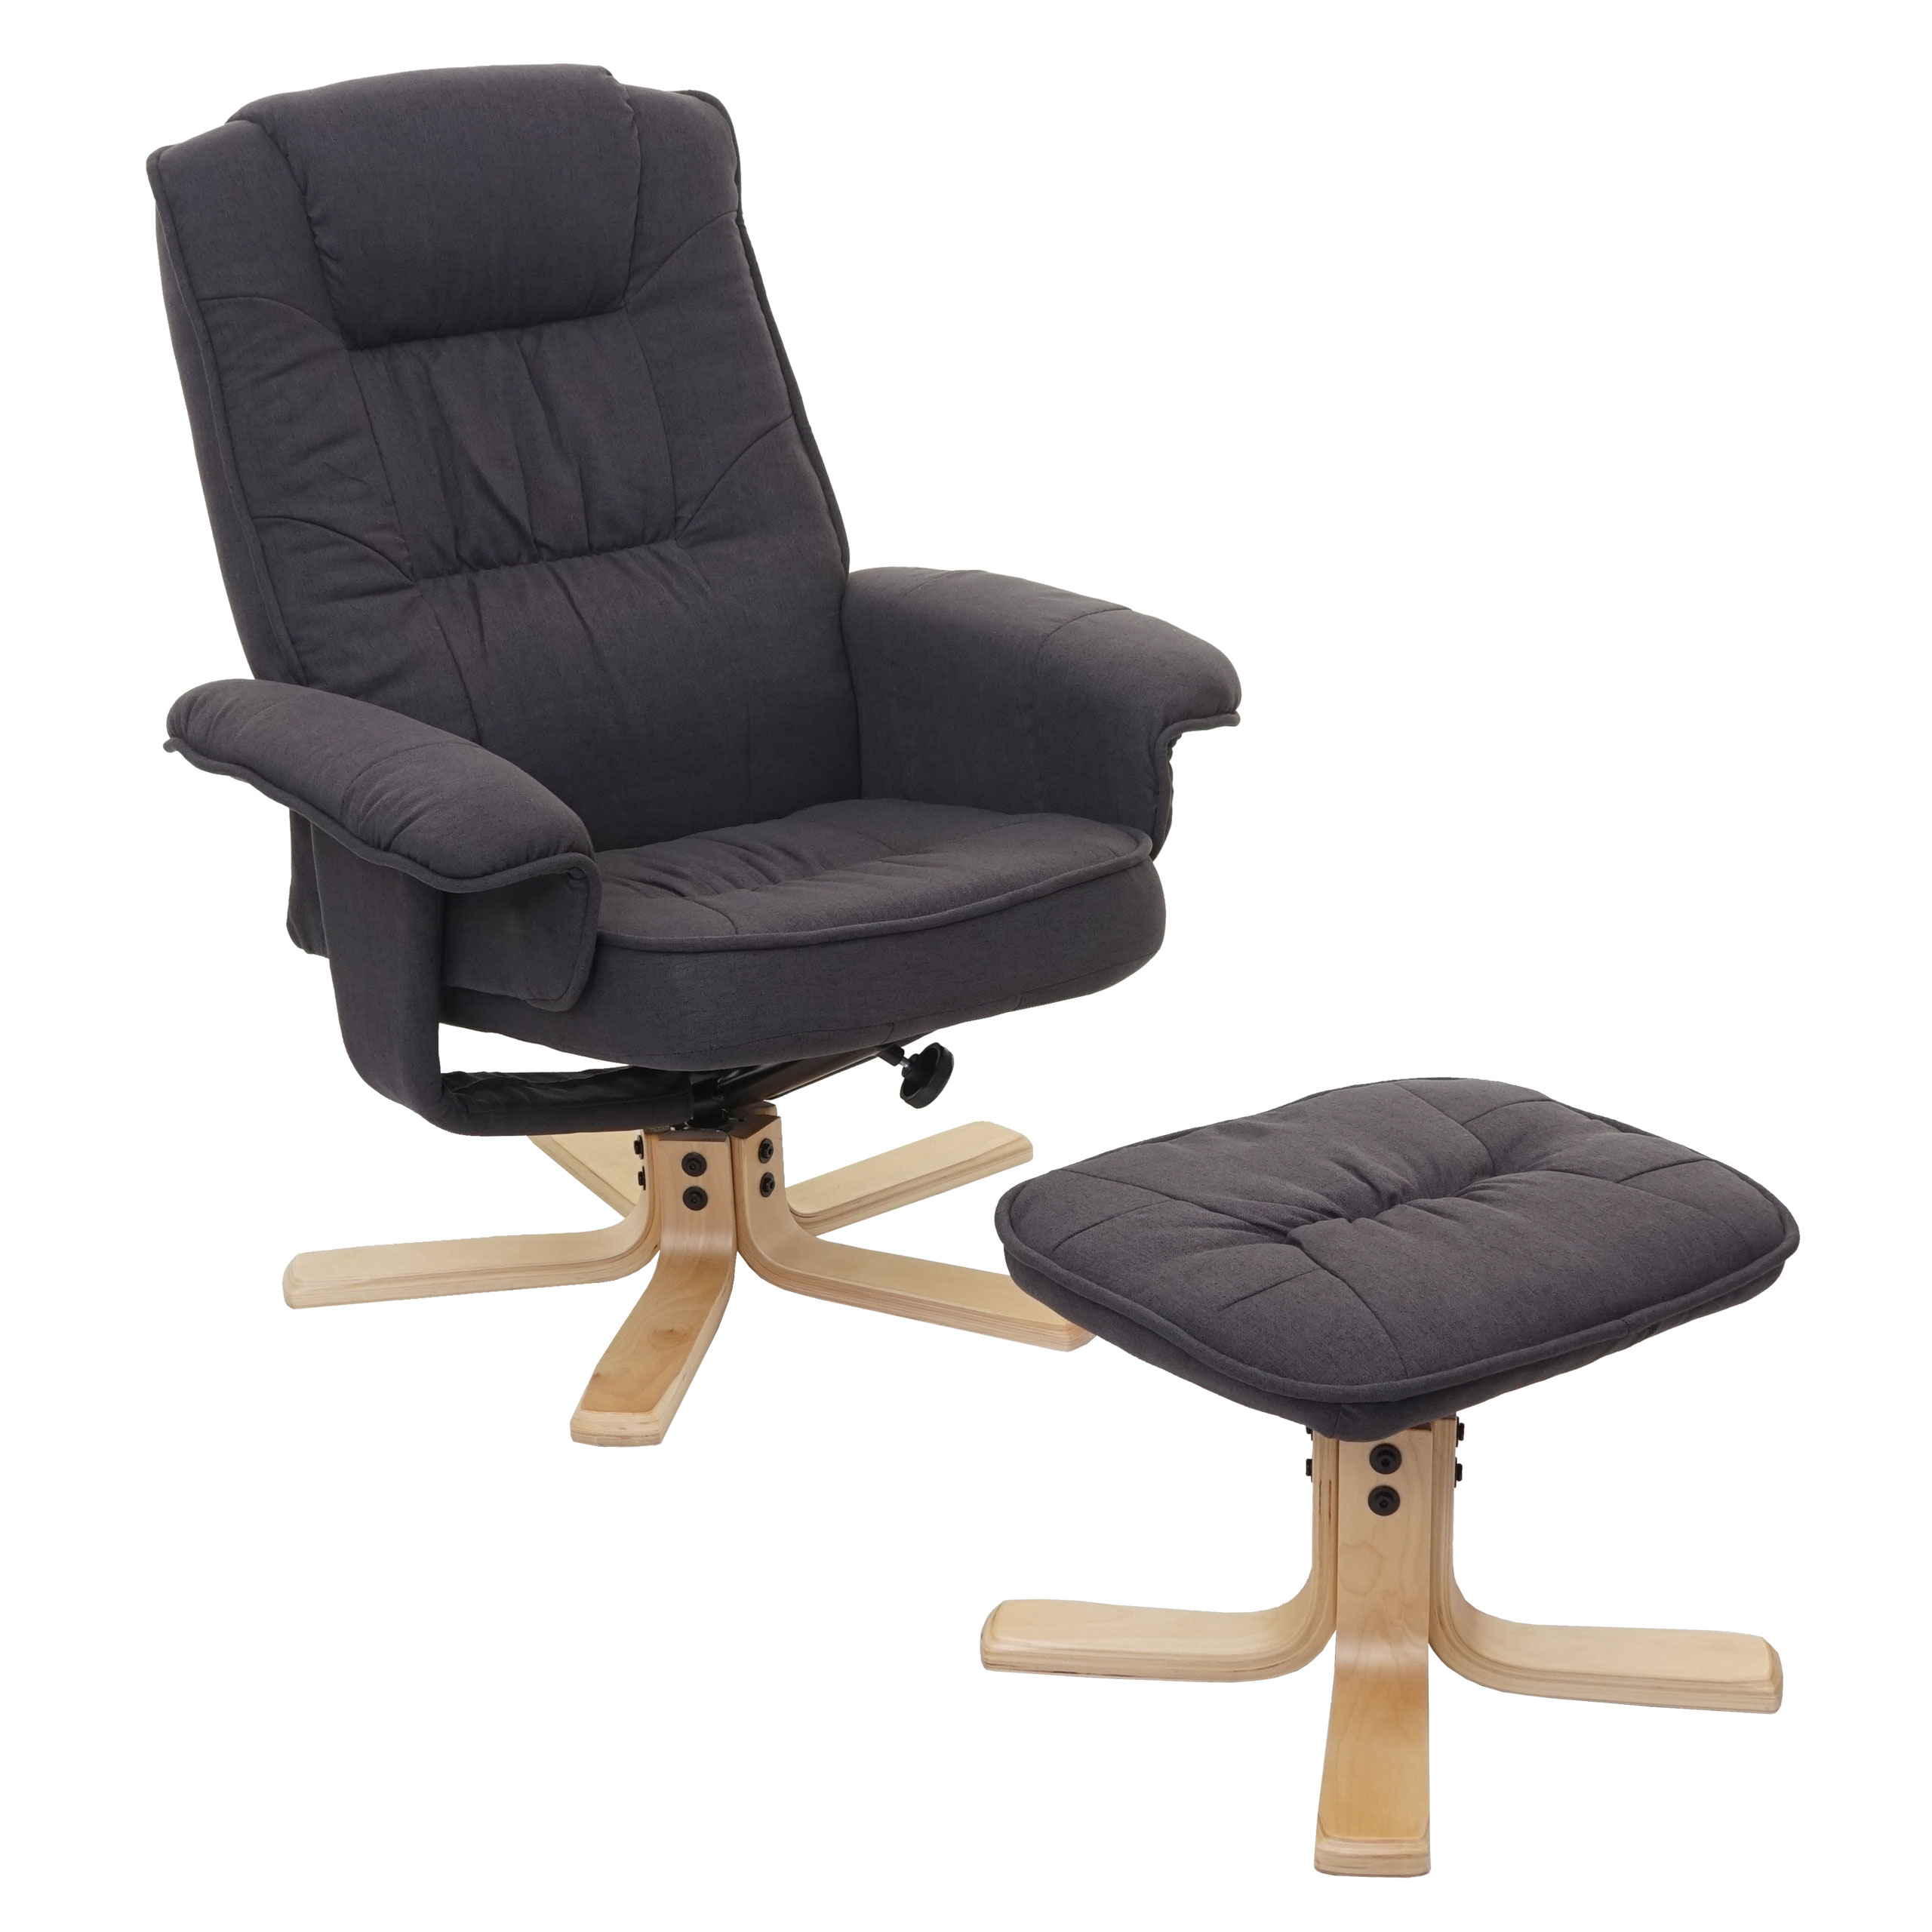 Relaxsessel M56, Fernsehsessel TV-Sessel mit Hocker, Textil | eBay